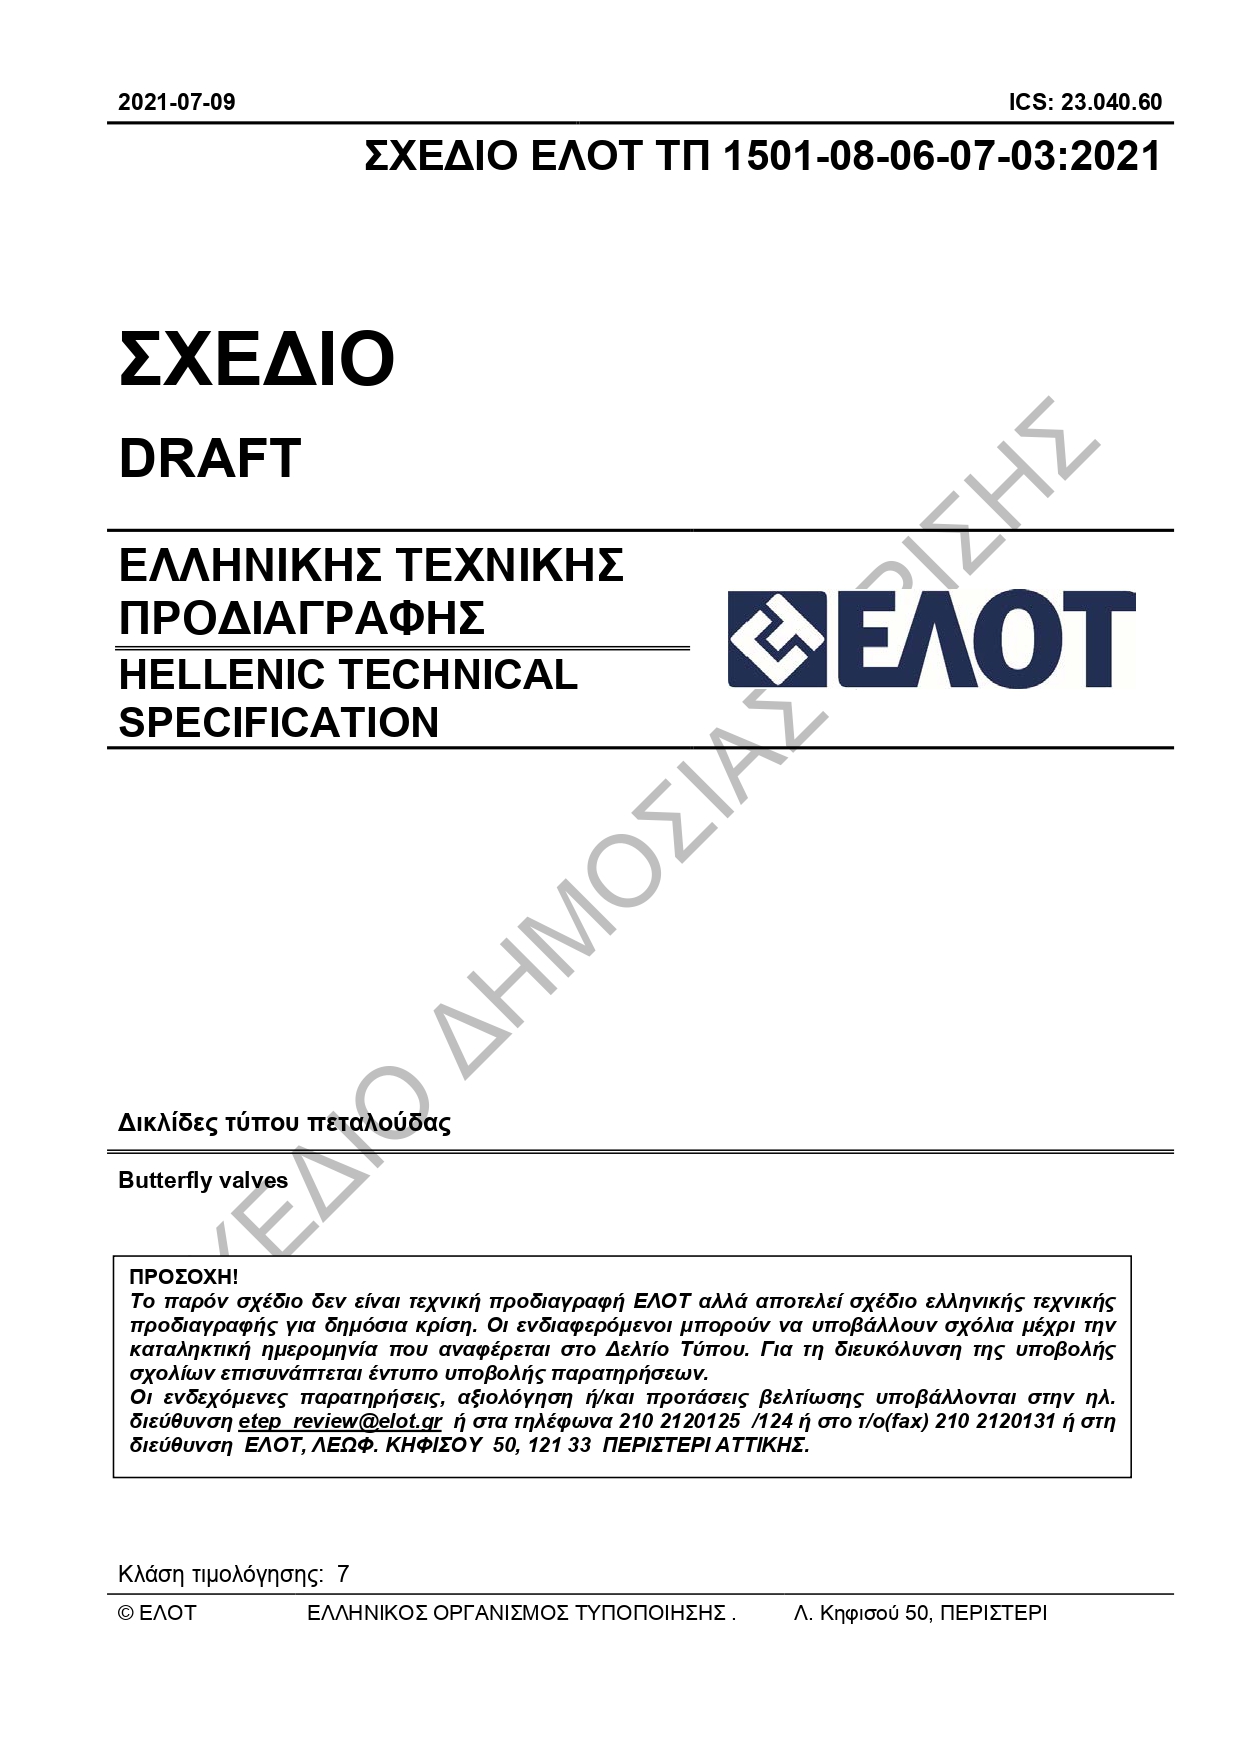 Update of Greek Technical Specifications (ETEP) (Greece)